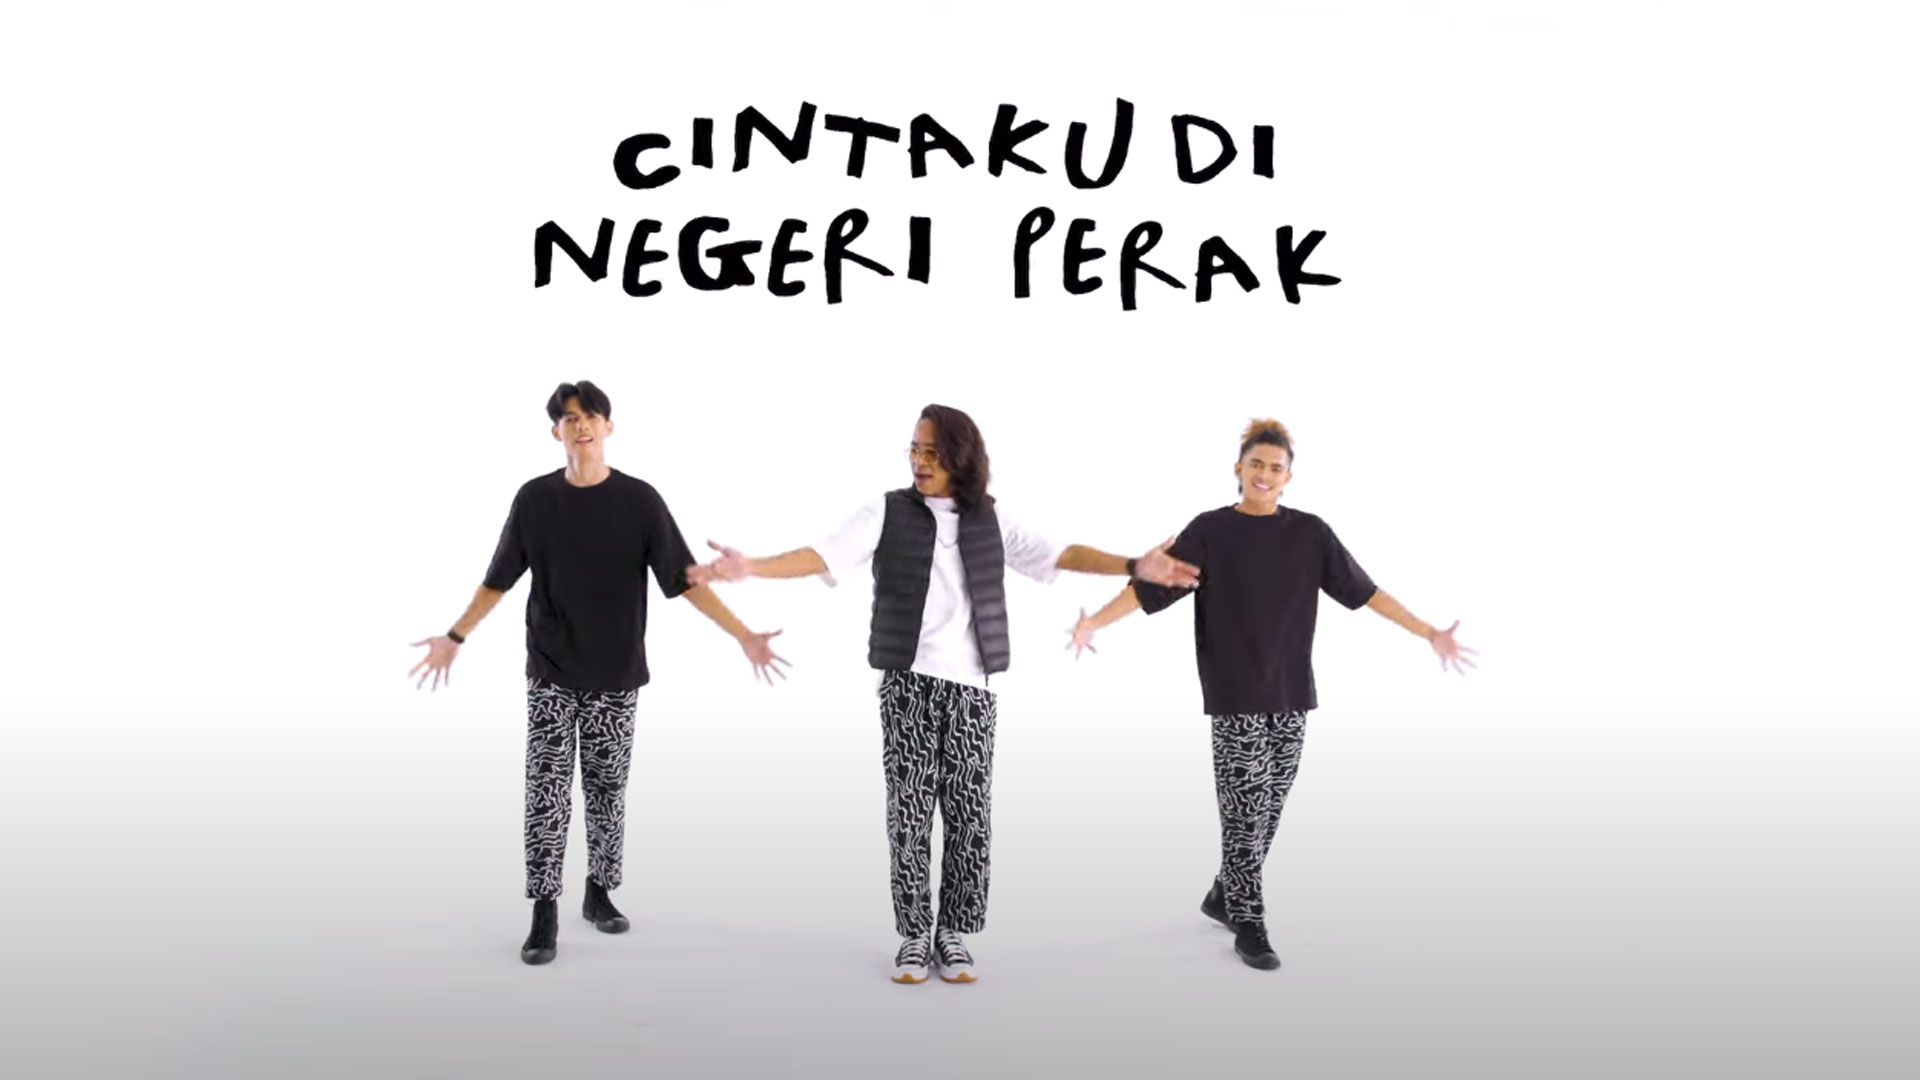 Hazama - Cintaku Di Negeri Perak (Official Music Video)